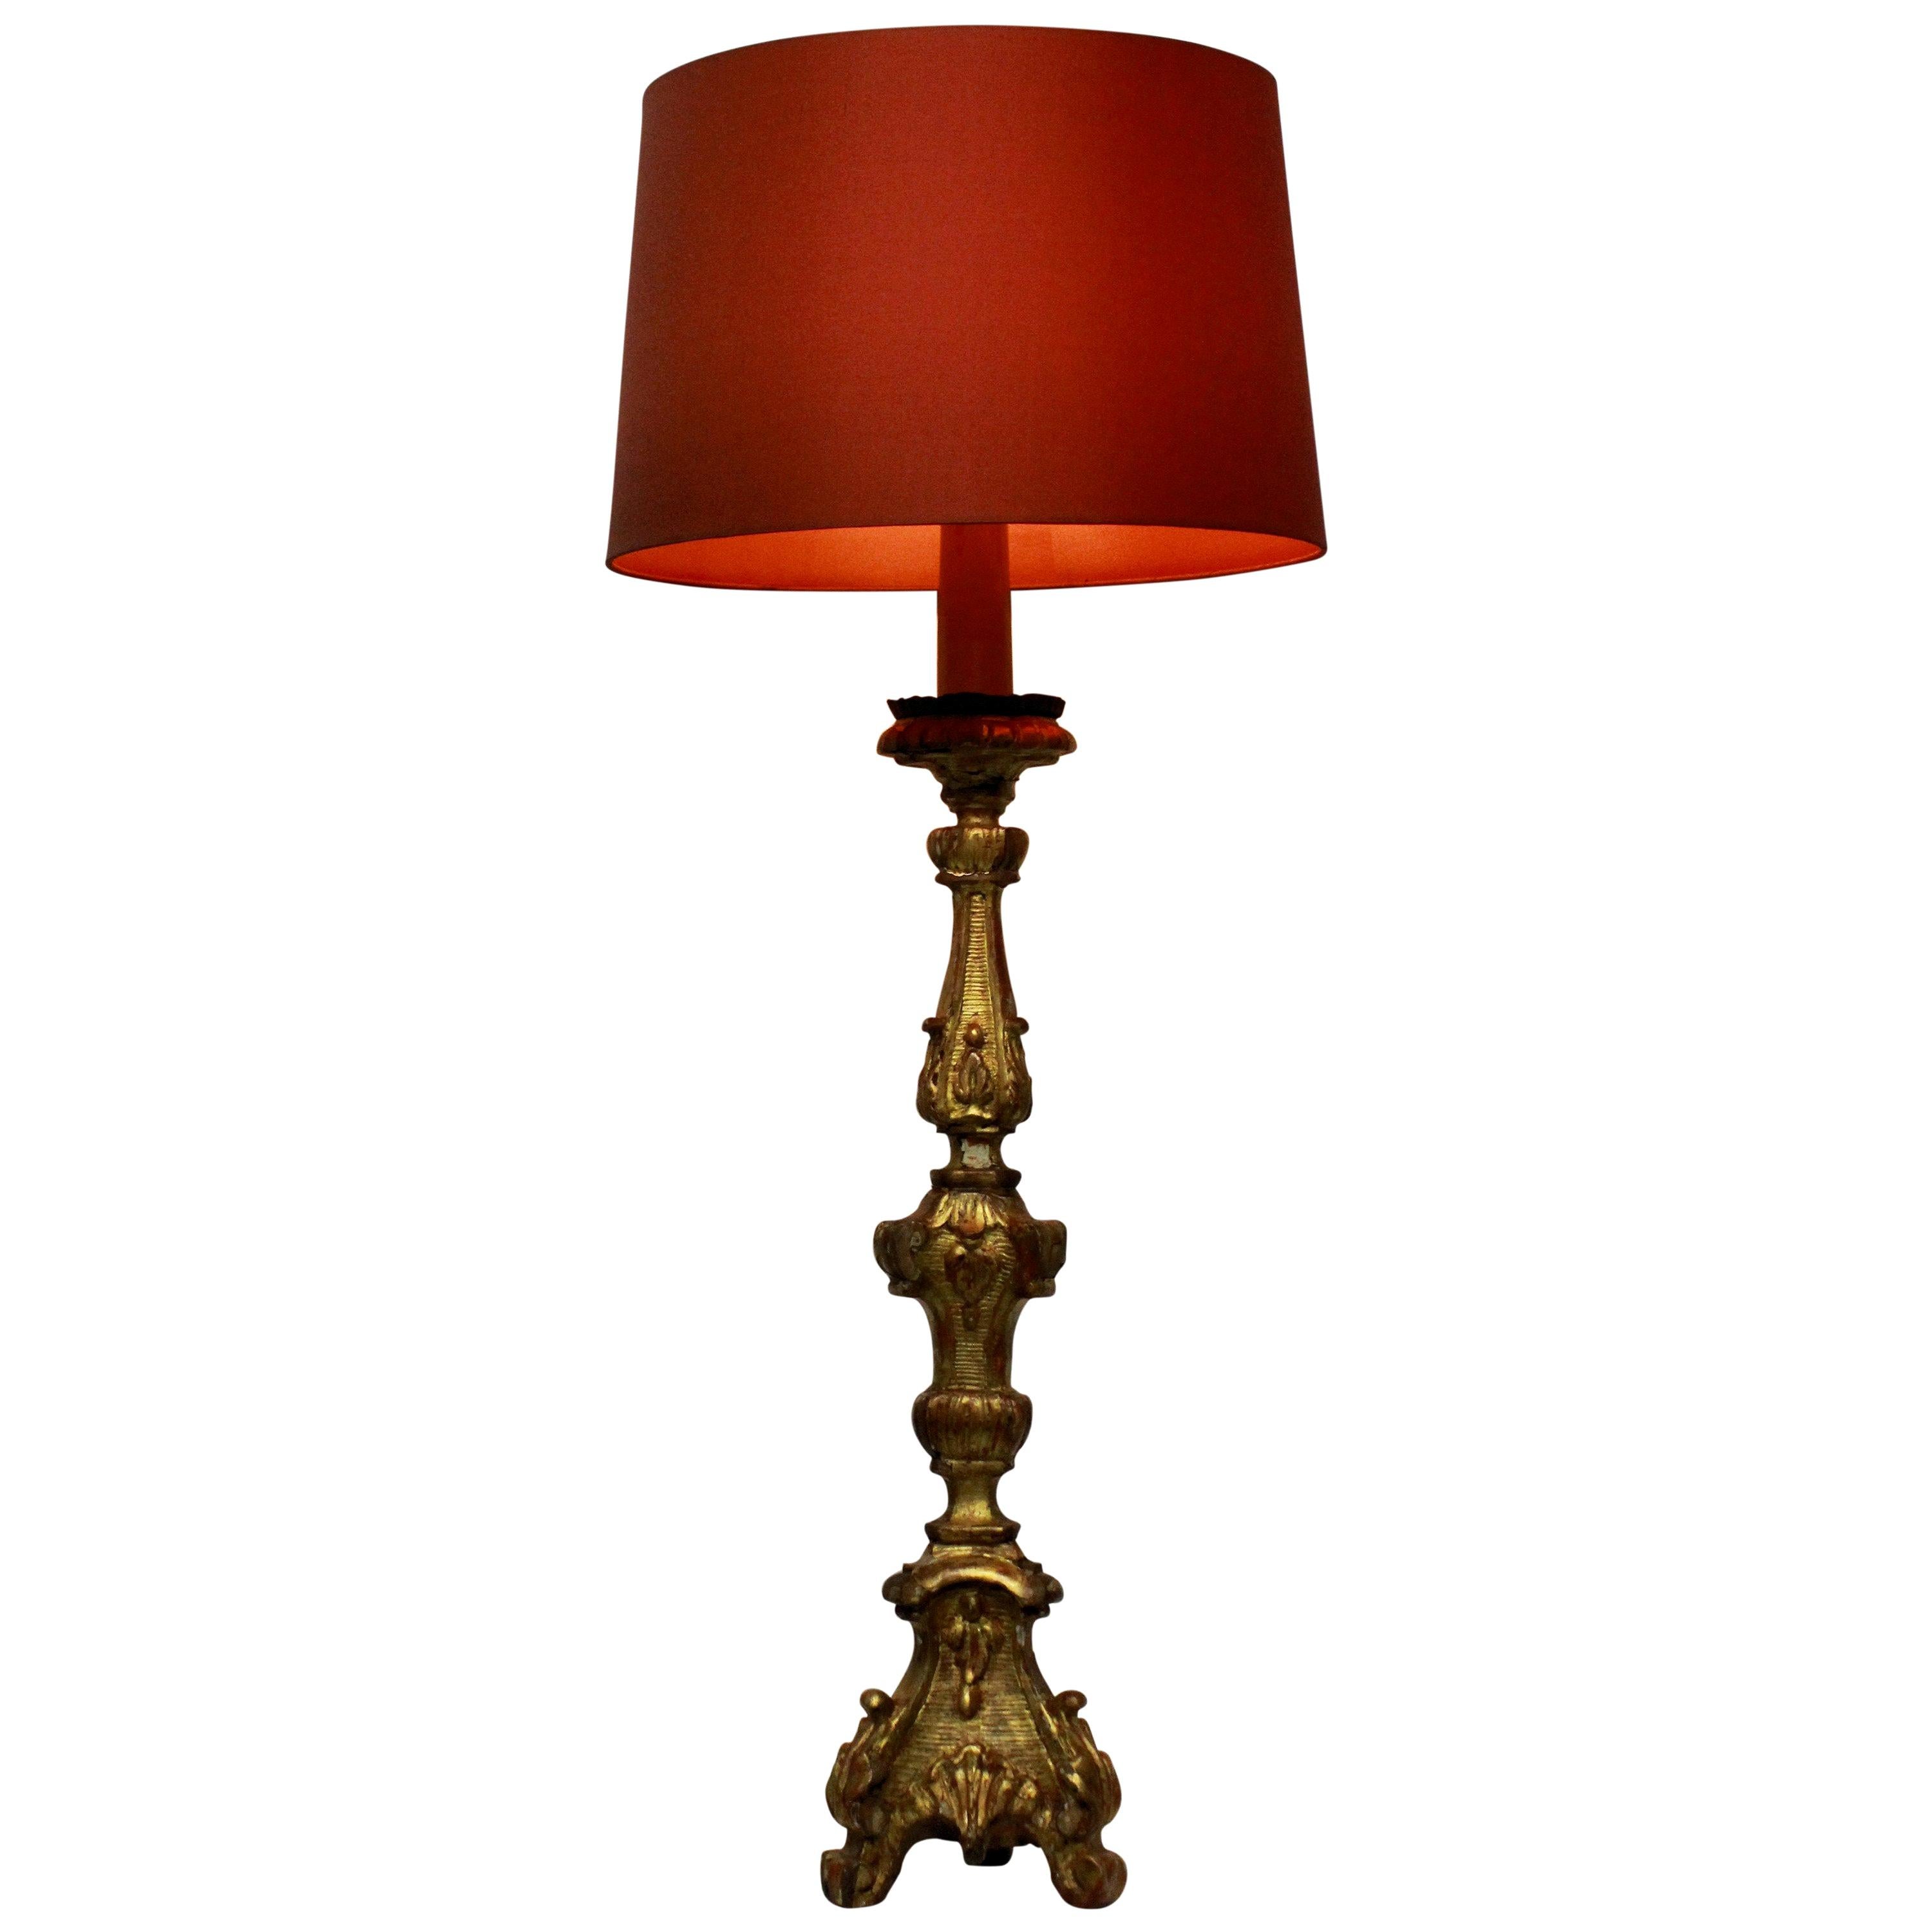 Italian 18th Century Giltwood Lamp